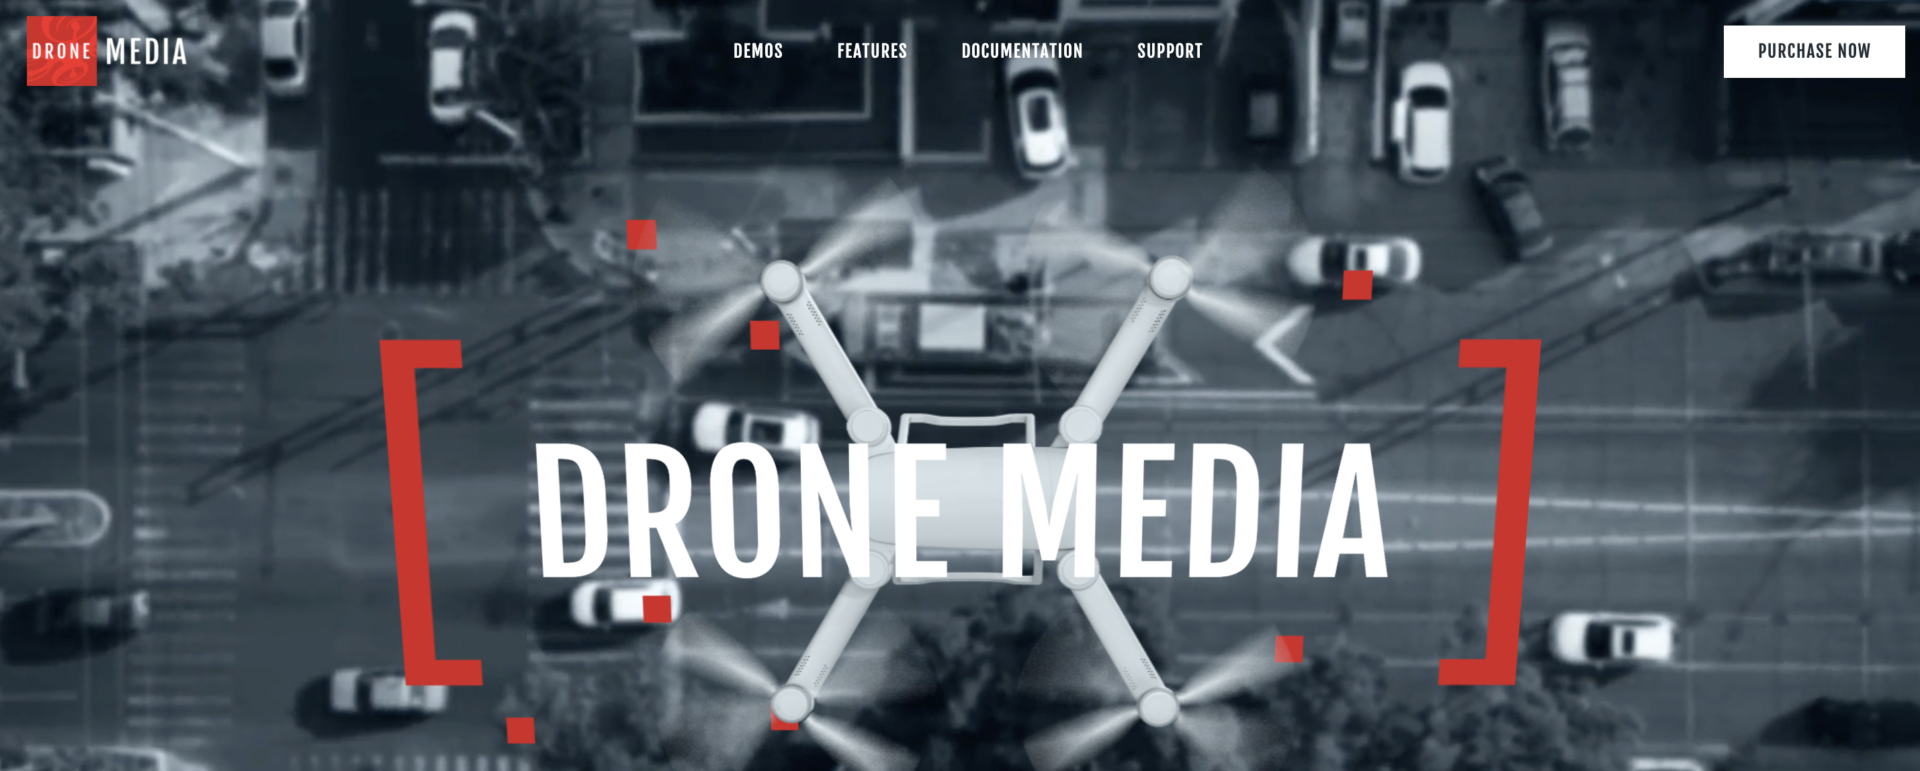 drone media - blue wordpress themes